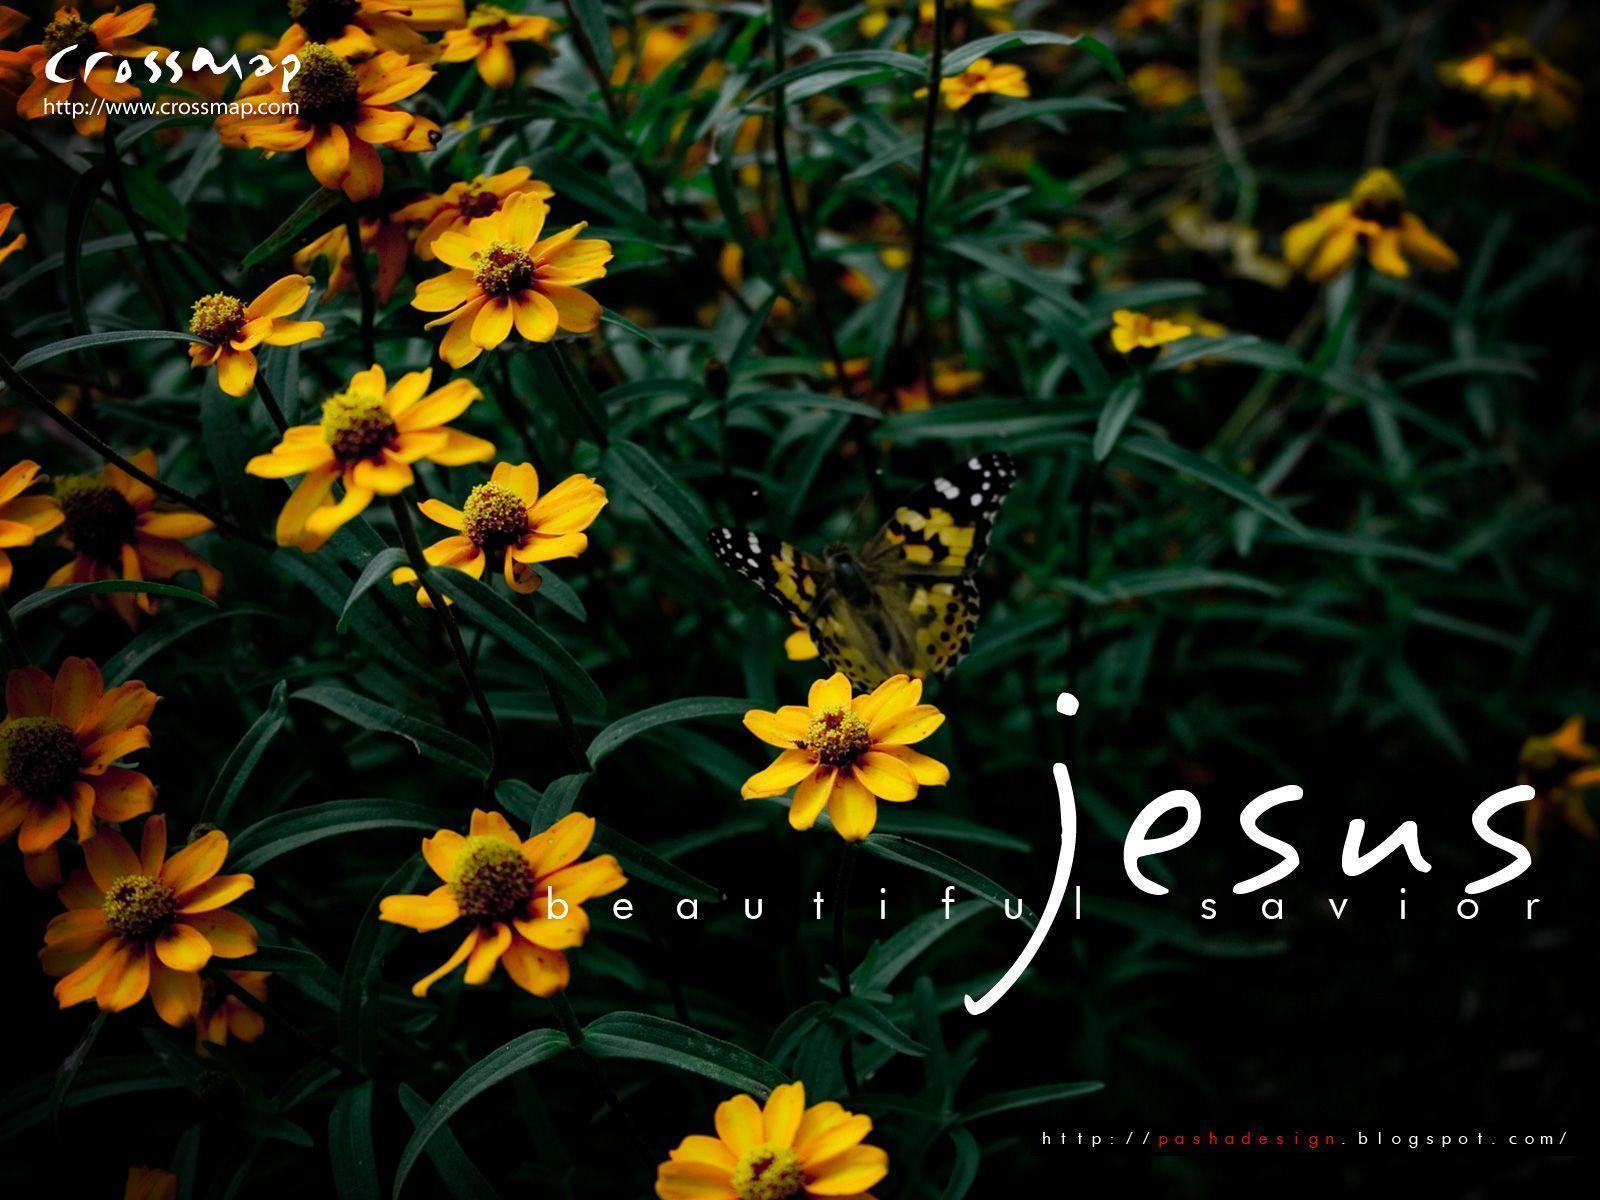 Jesus Beautiful Savior 4. Christian Photographs. Crossmap